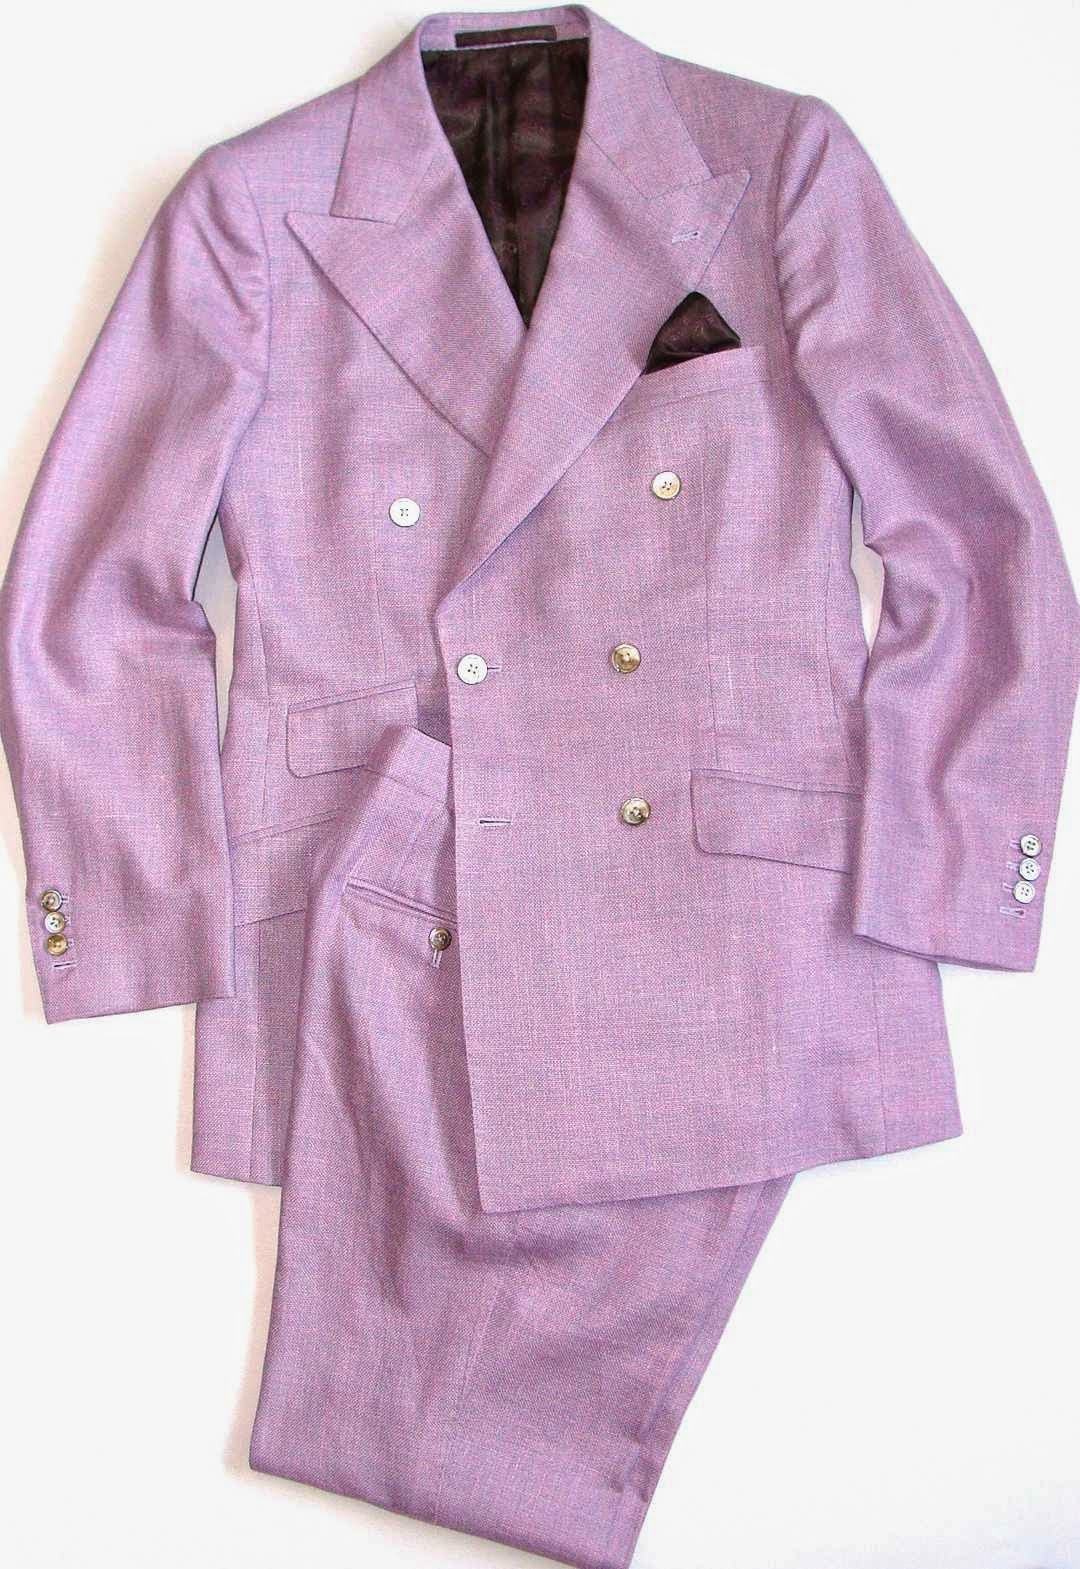 L Gotti Collection Custom Clothiers & Suits